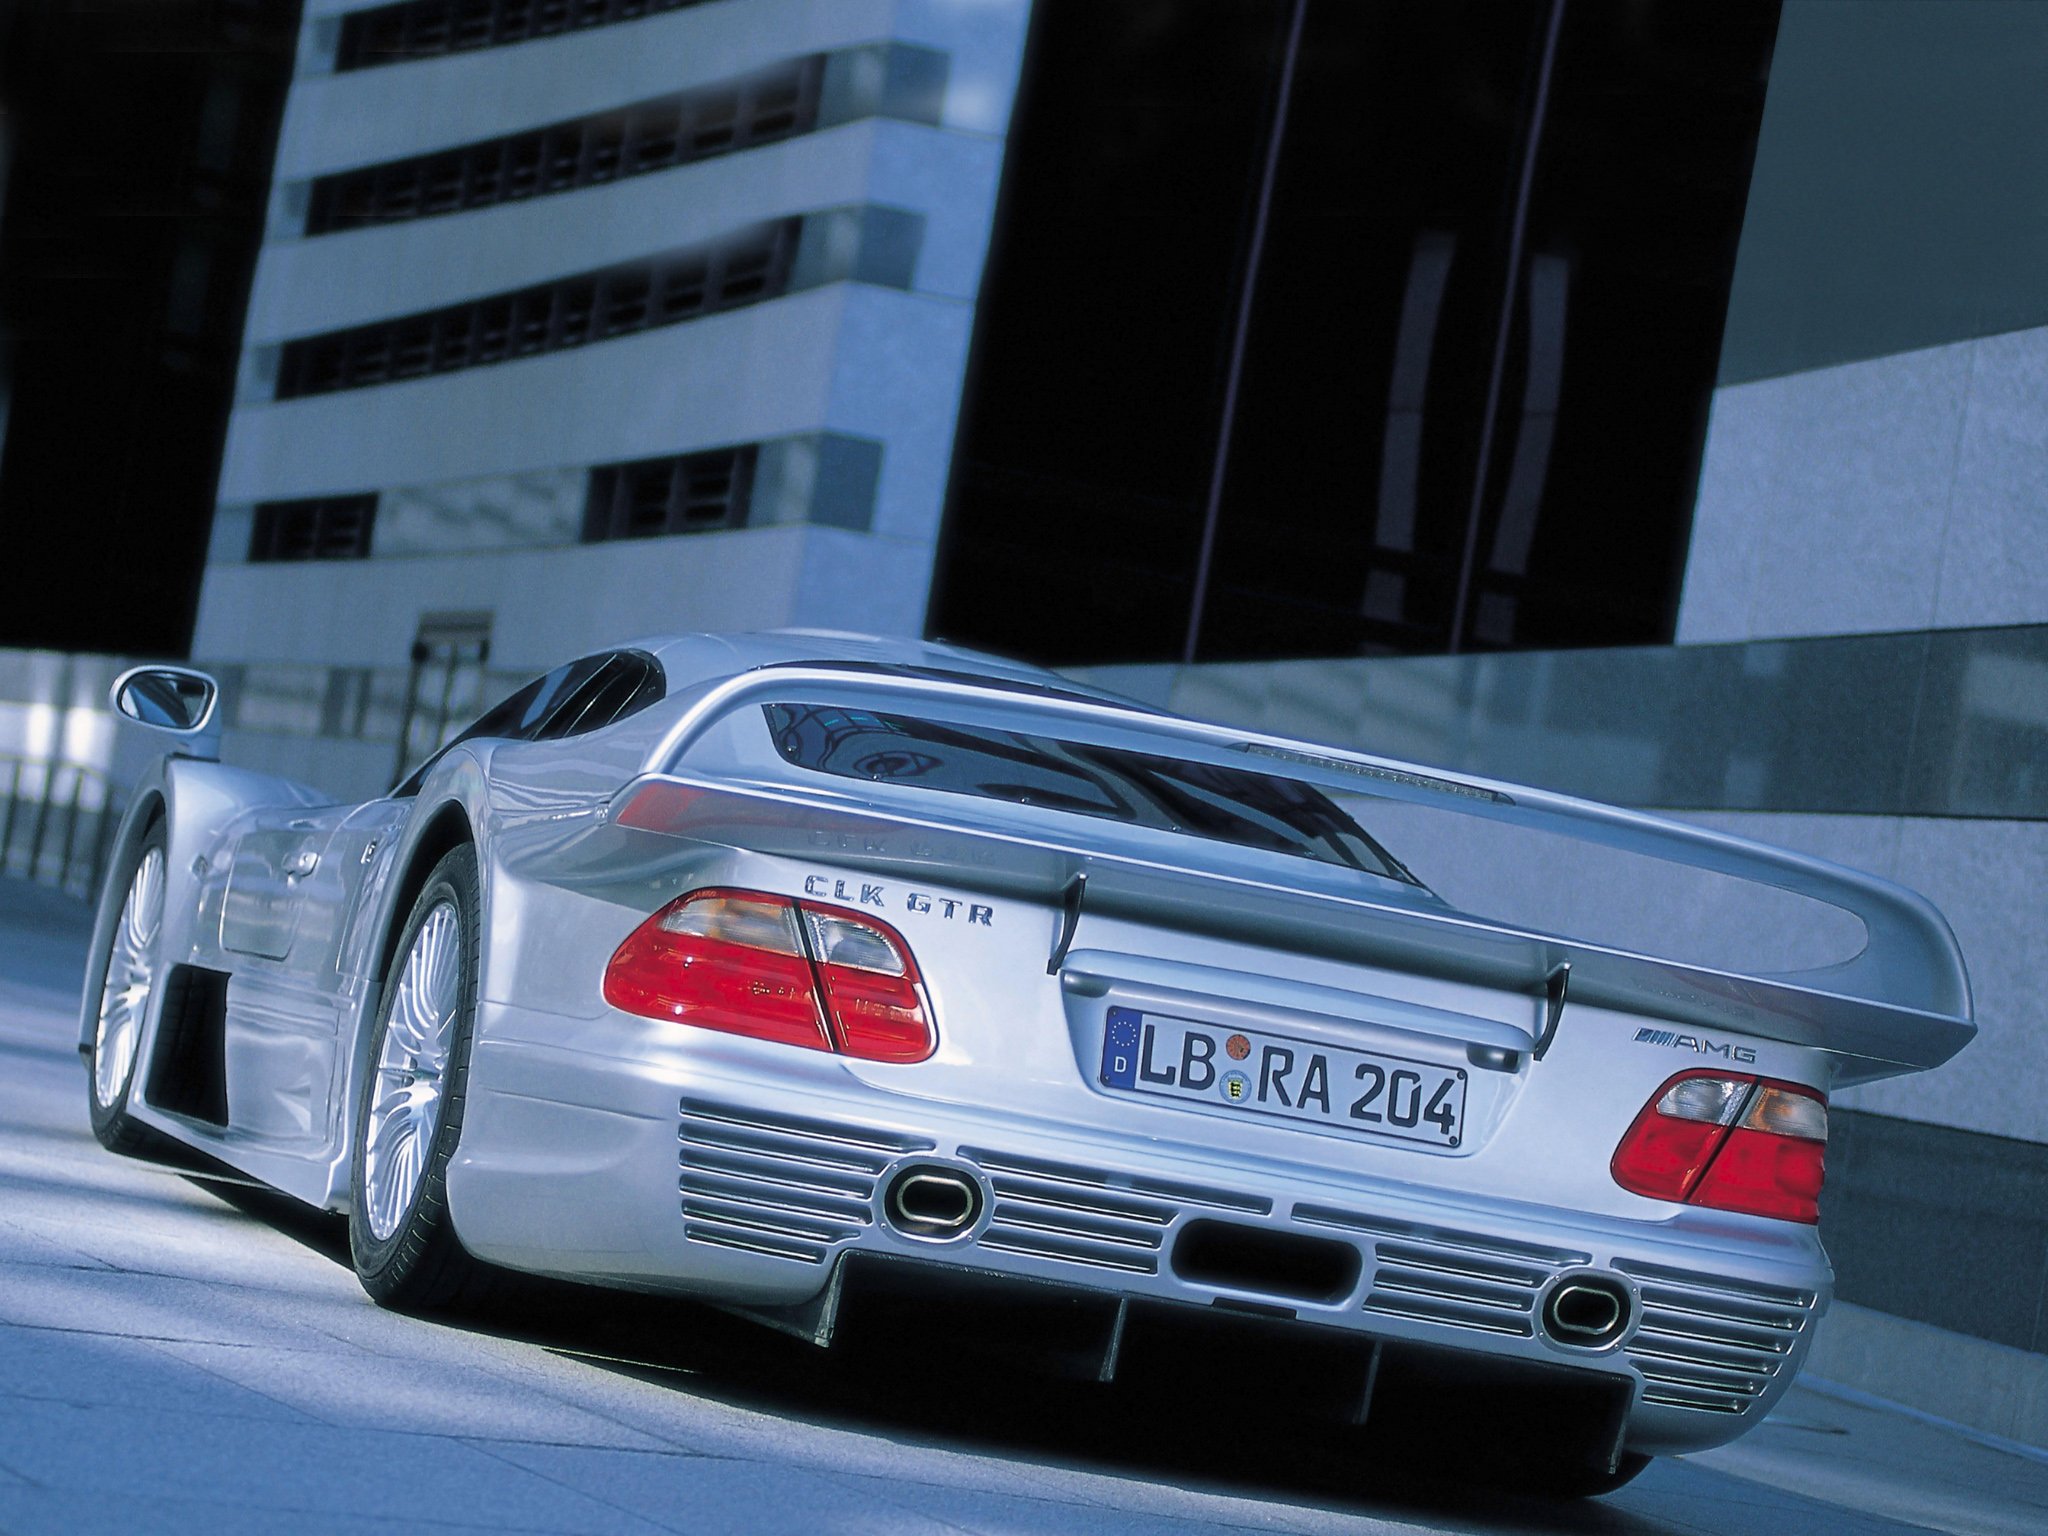 mercedes, Benz, Clk, Gtr, Amg, Road, Version, Cars, Supercars, 1997 Wallpaper